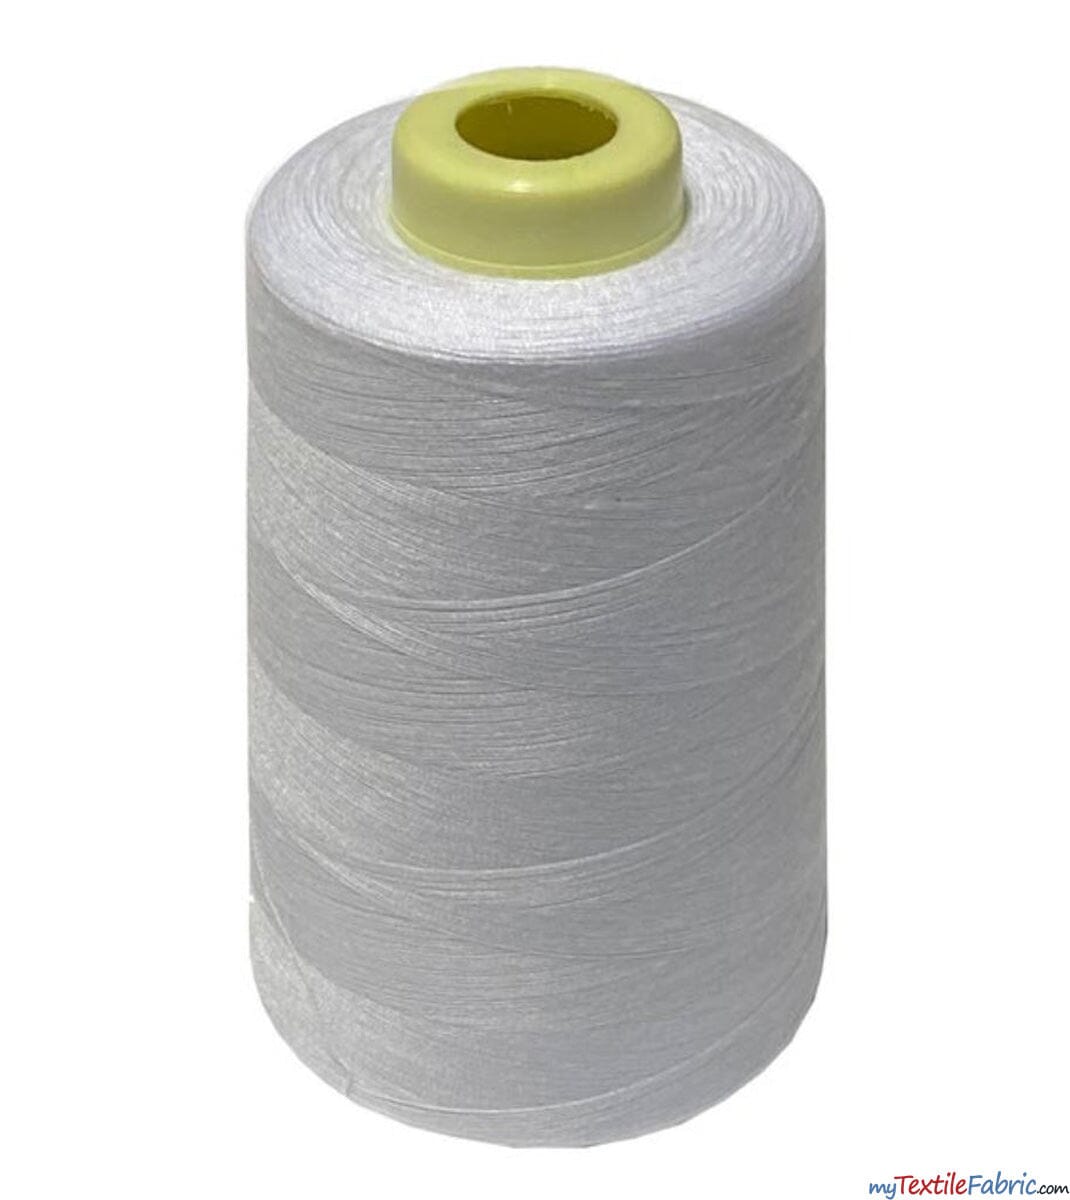 4pk Big Spool 100% Polyester Sewing Thread 2500 Yards Black & white 40S/2 